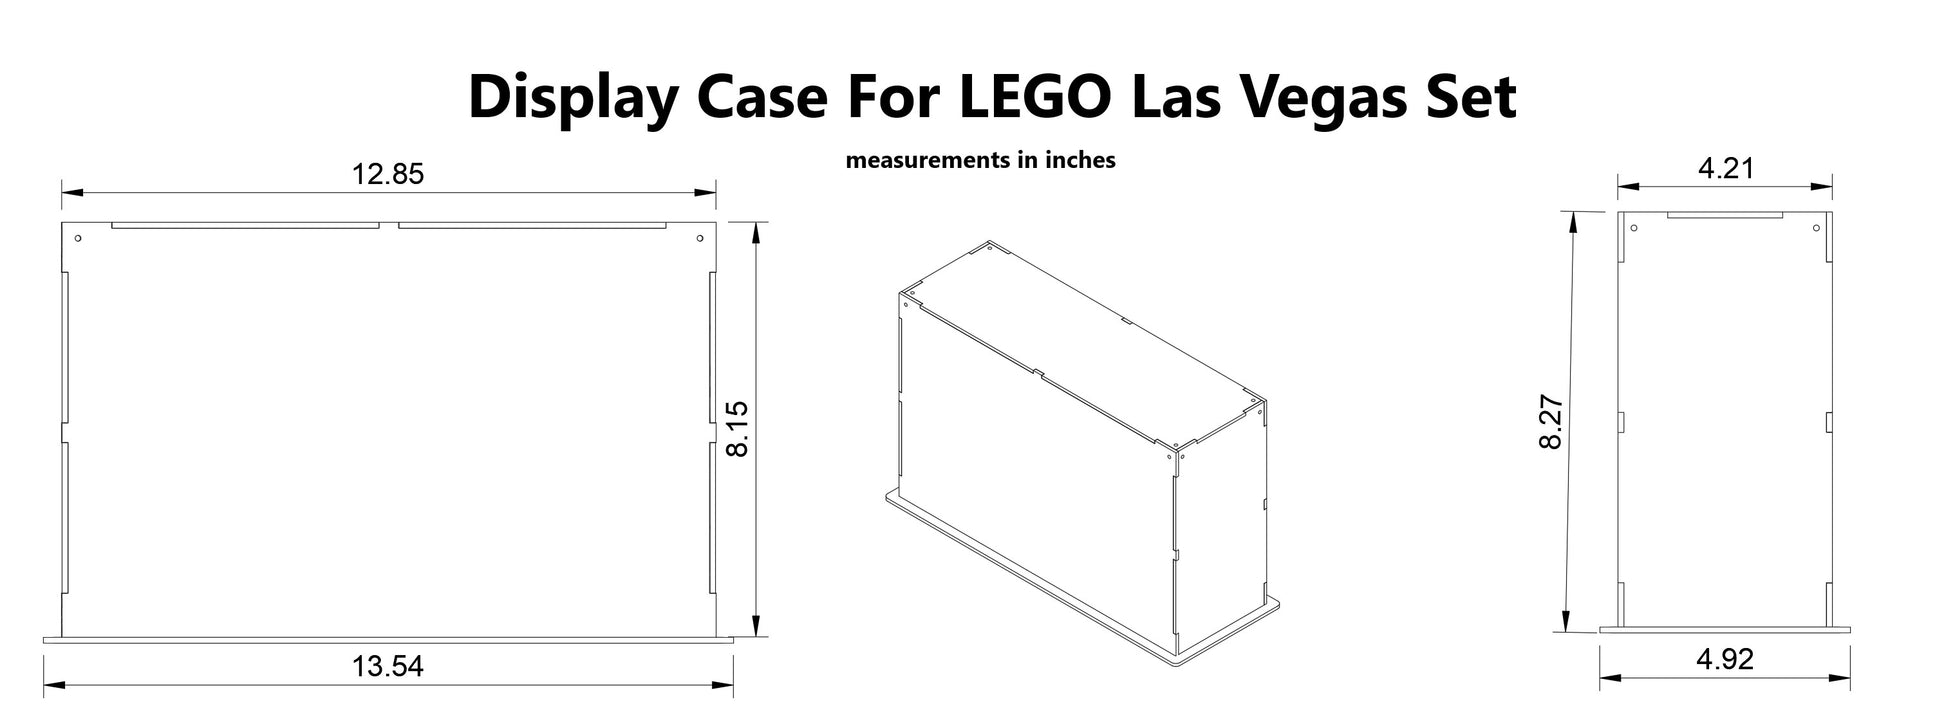 21047 Lego Architecture Las Vegas